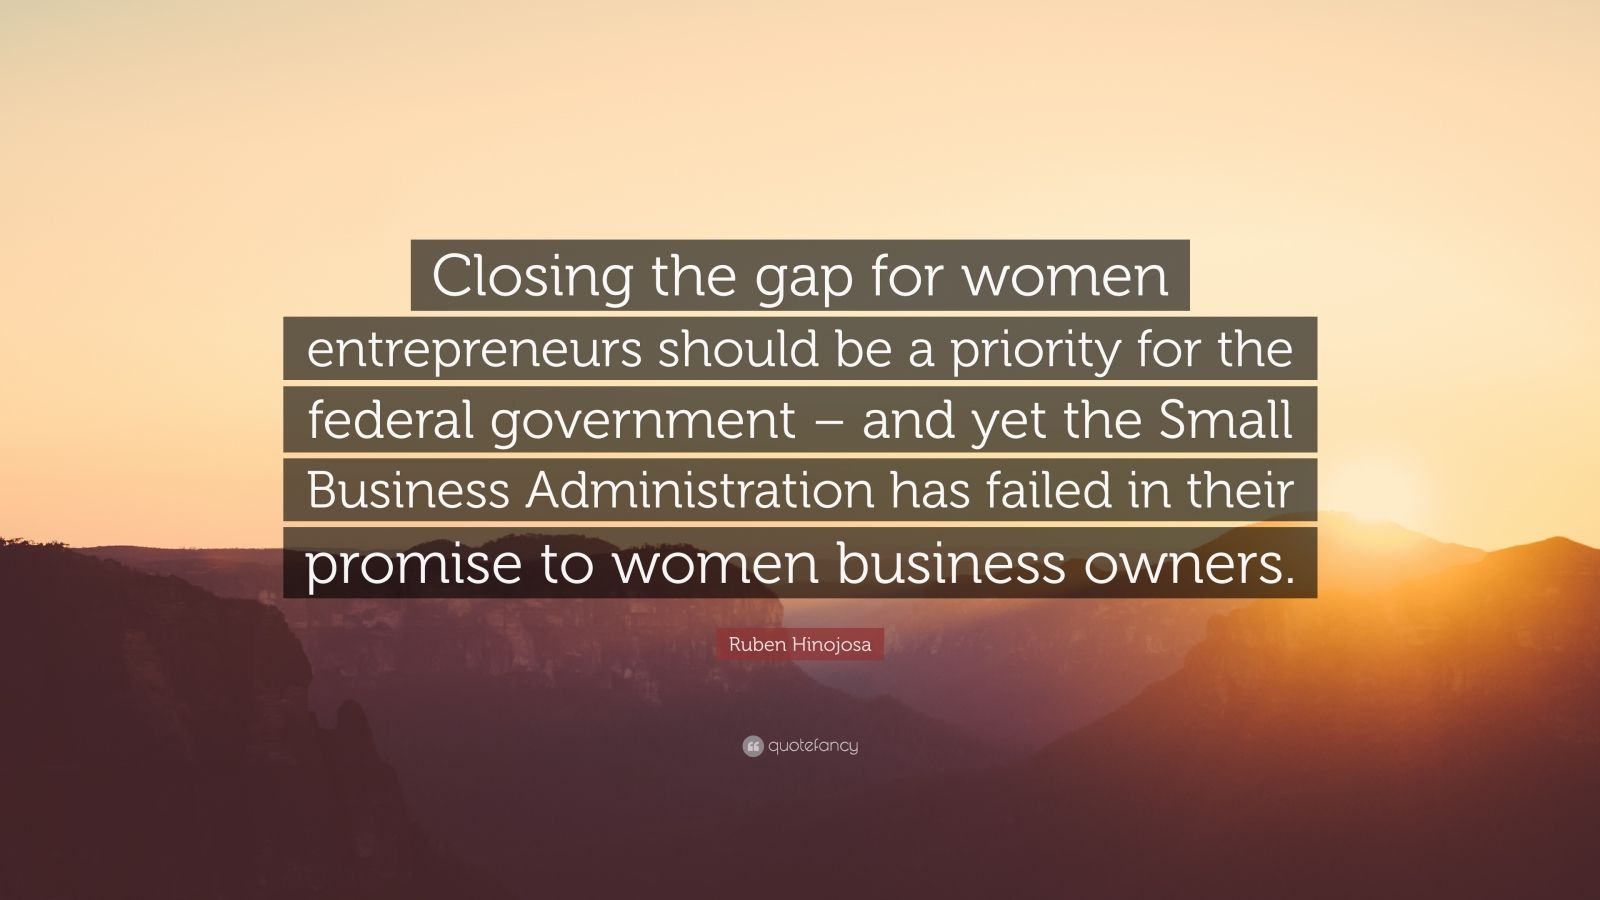 Ruben Hinojosa Quote: “Closing the gap for women entrepreneurs